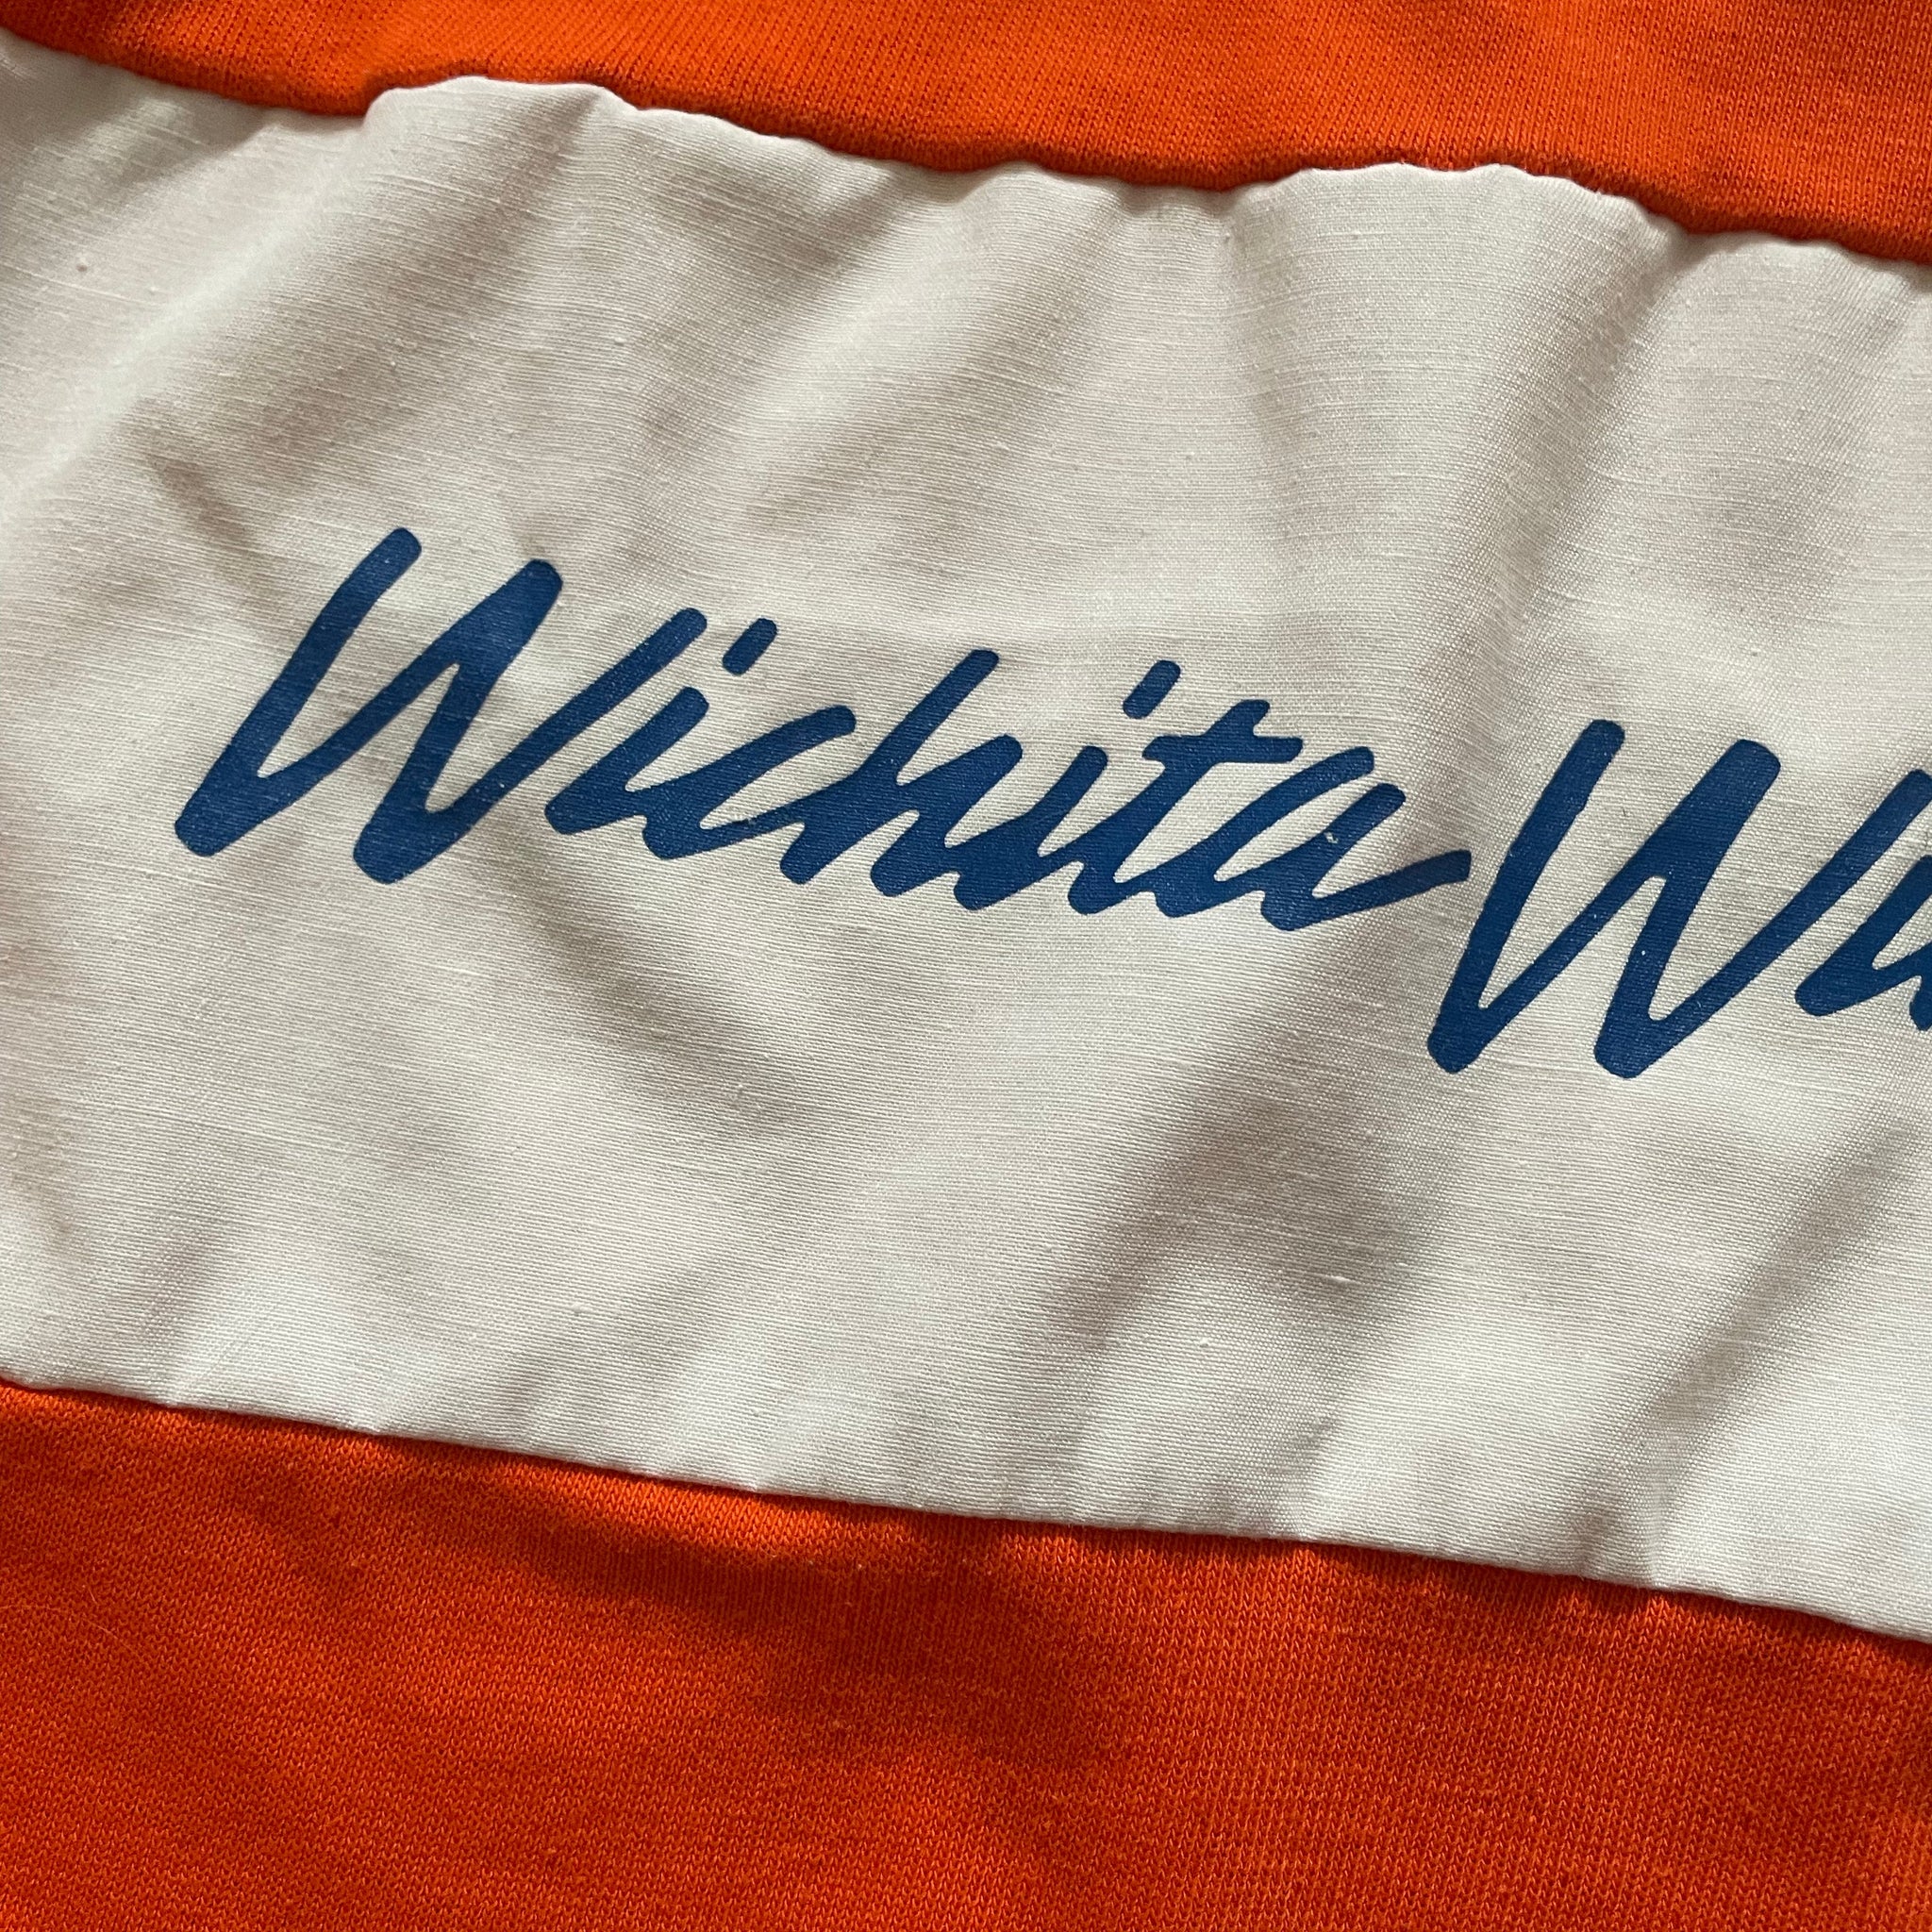 MISL Wichita Wings Rugby Shirt - M